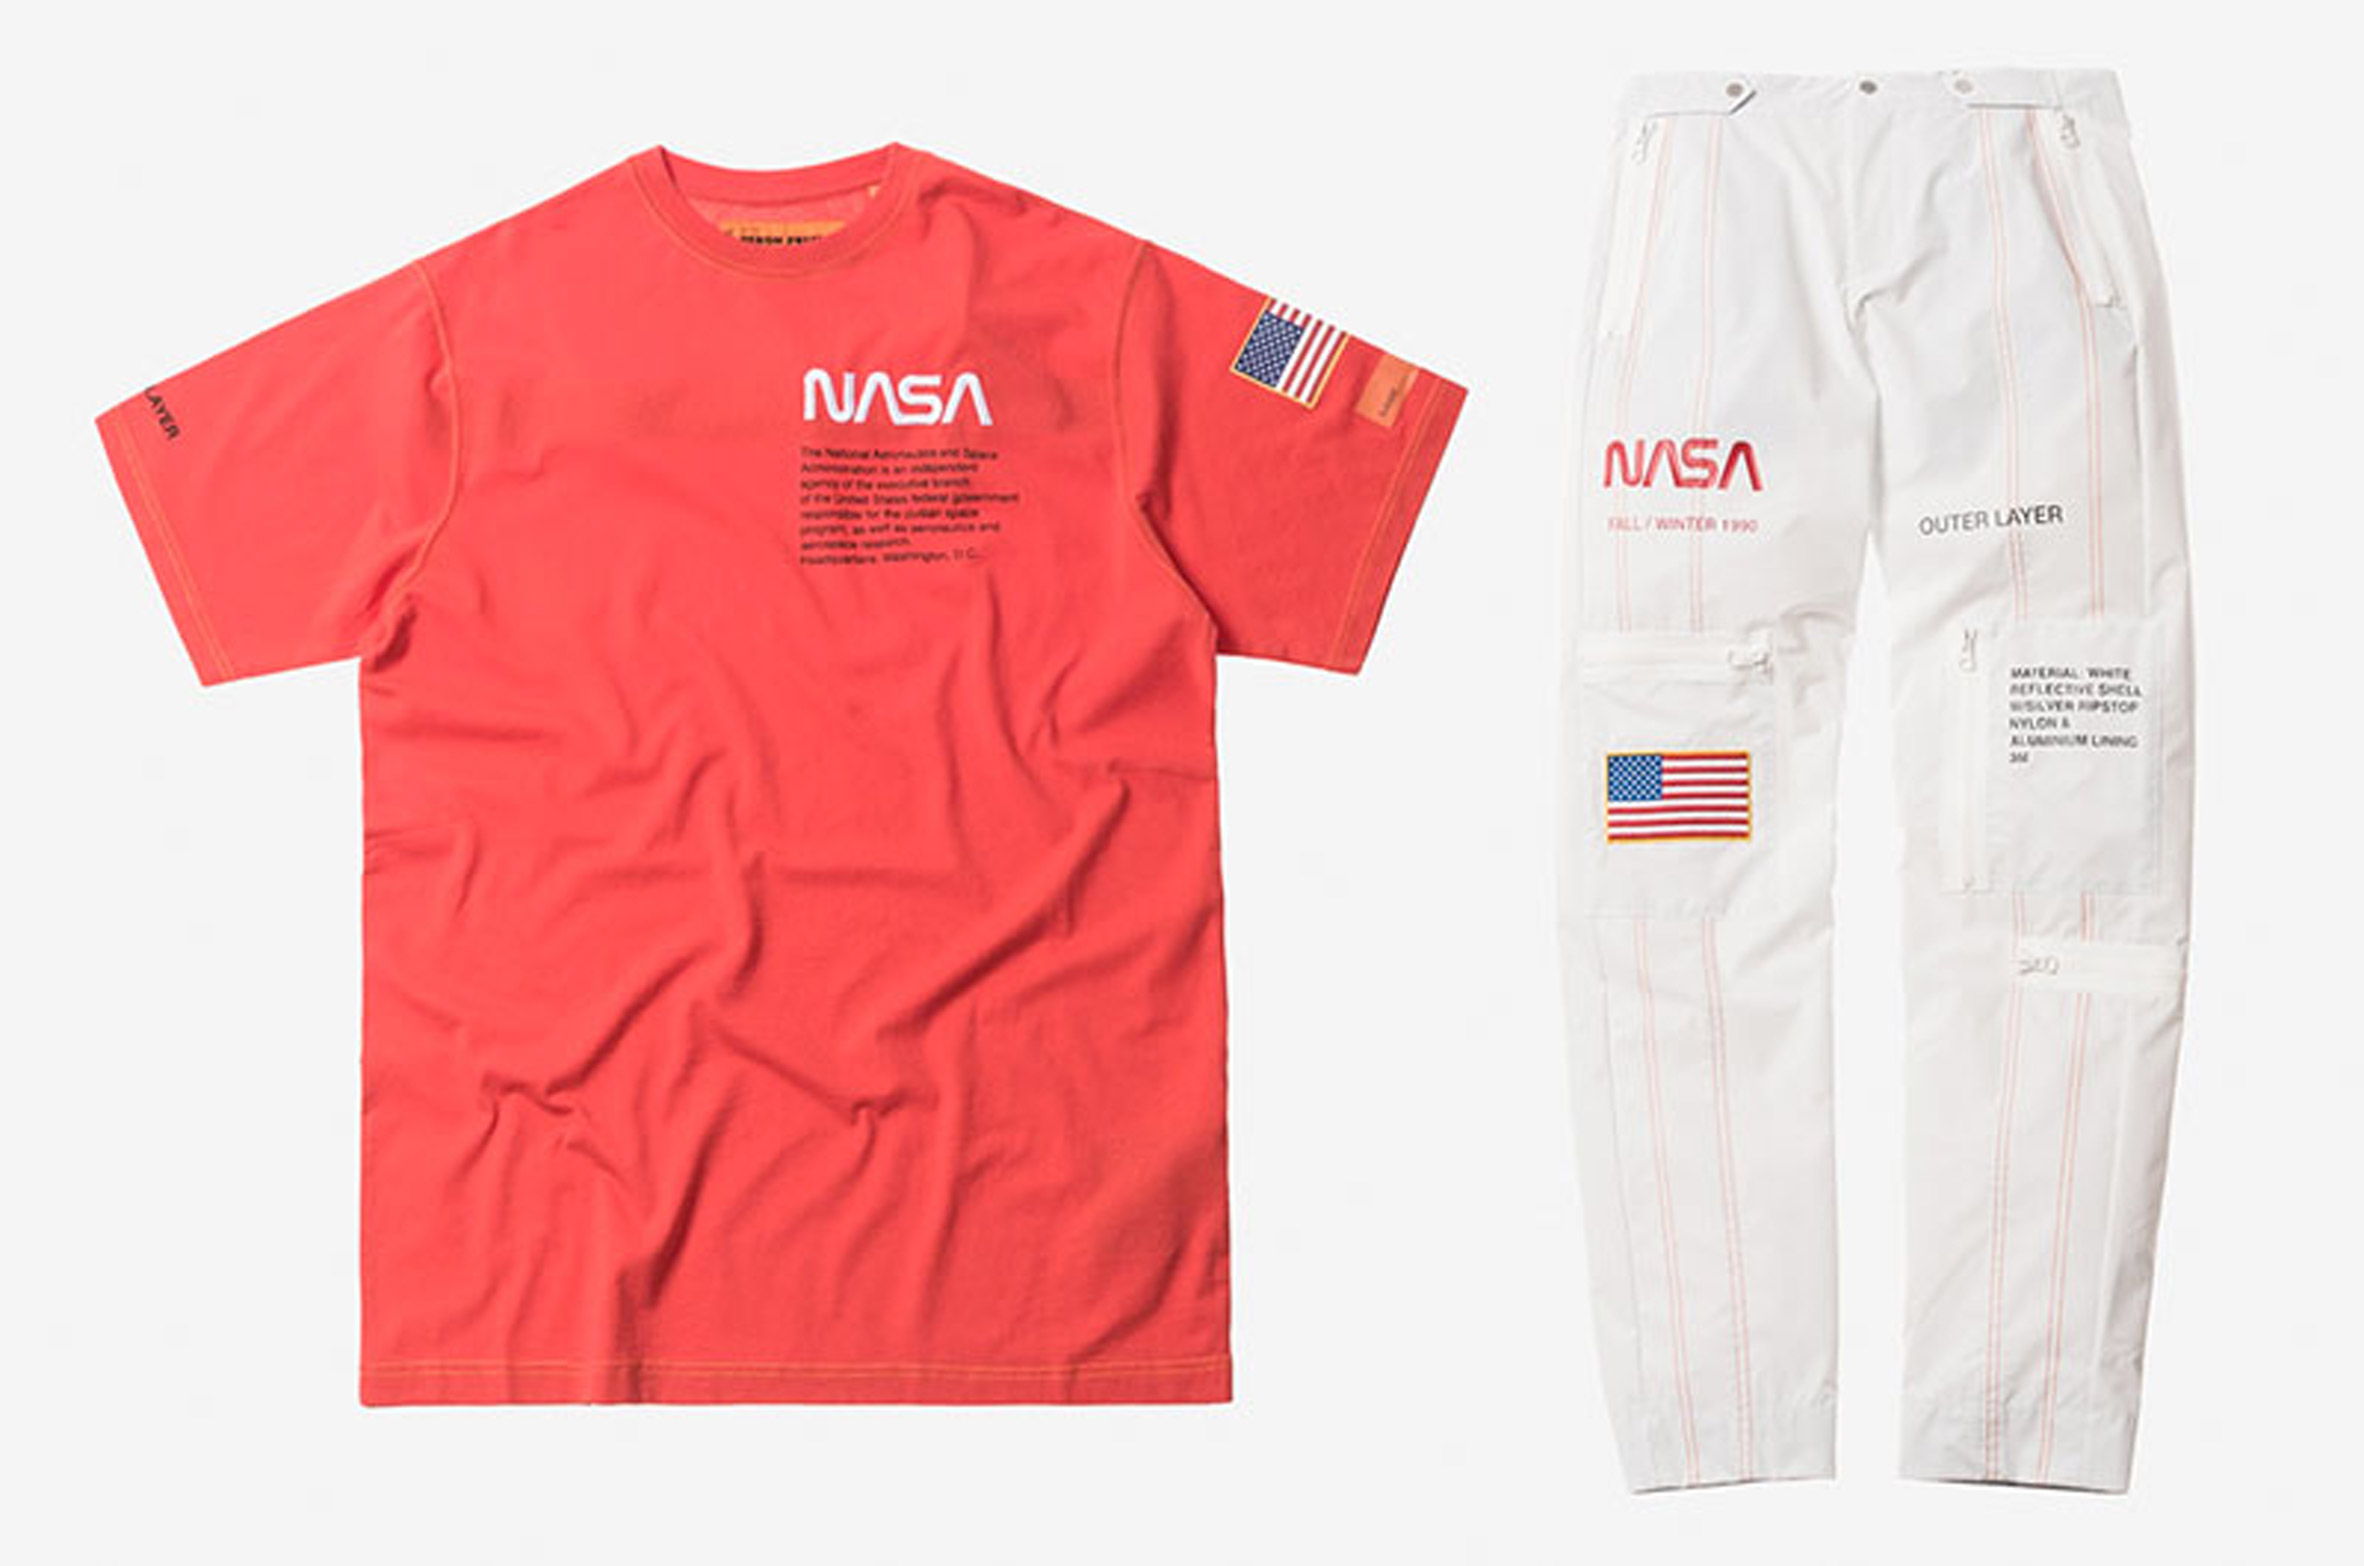 Heron Preston collaborates with NASA on streetwear collection